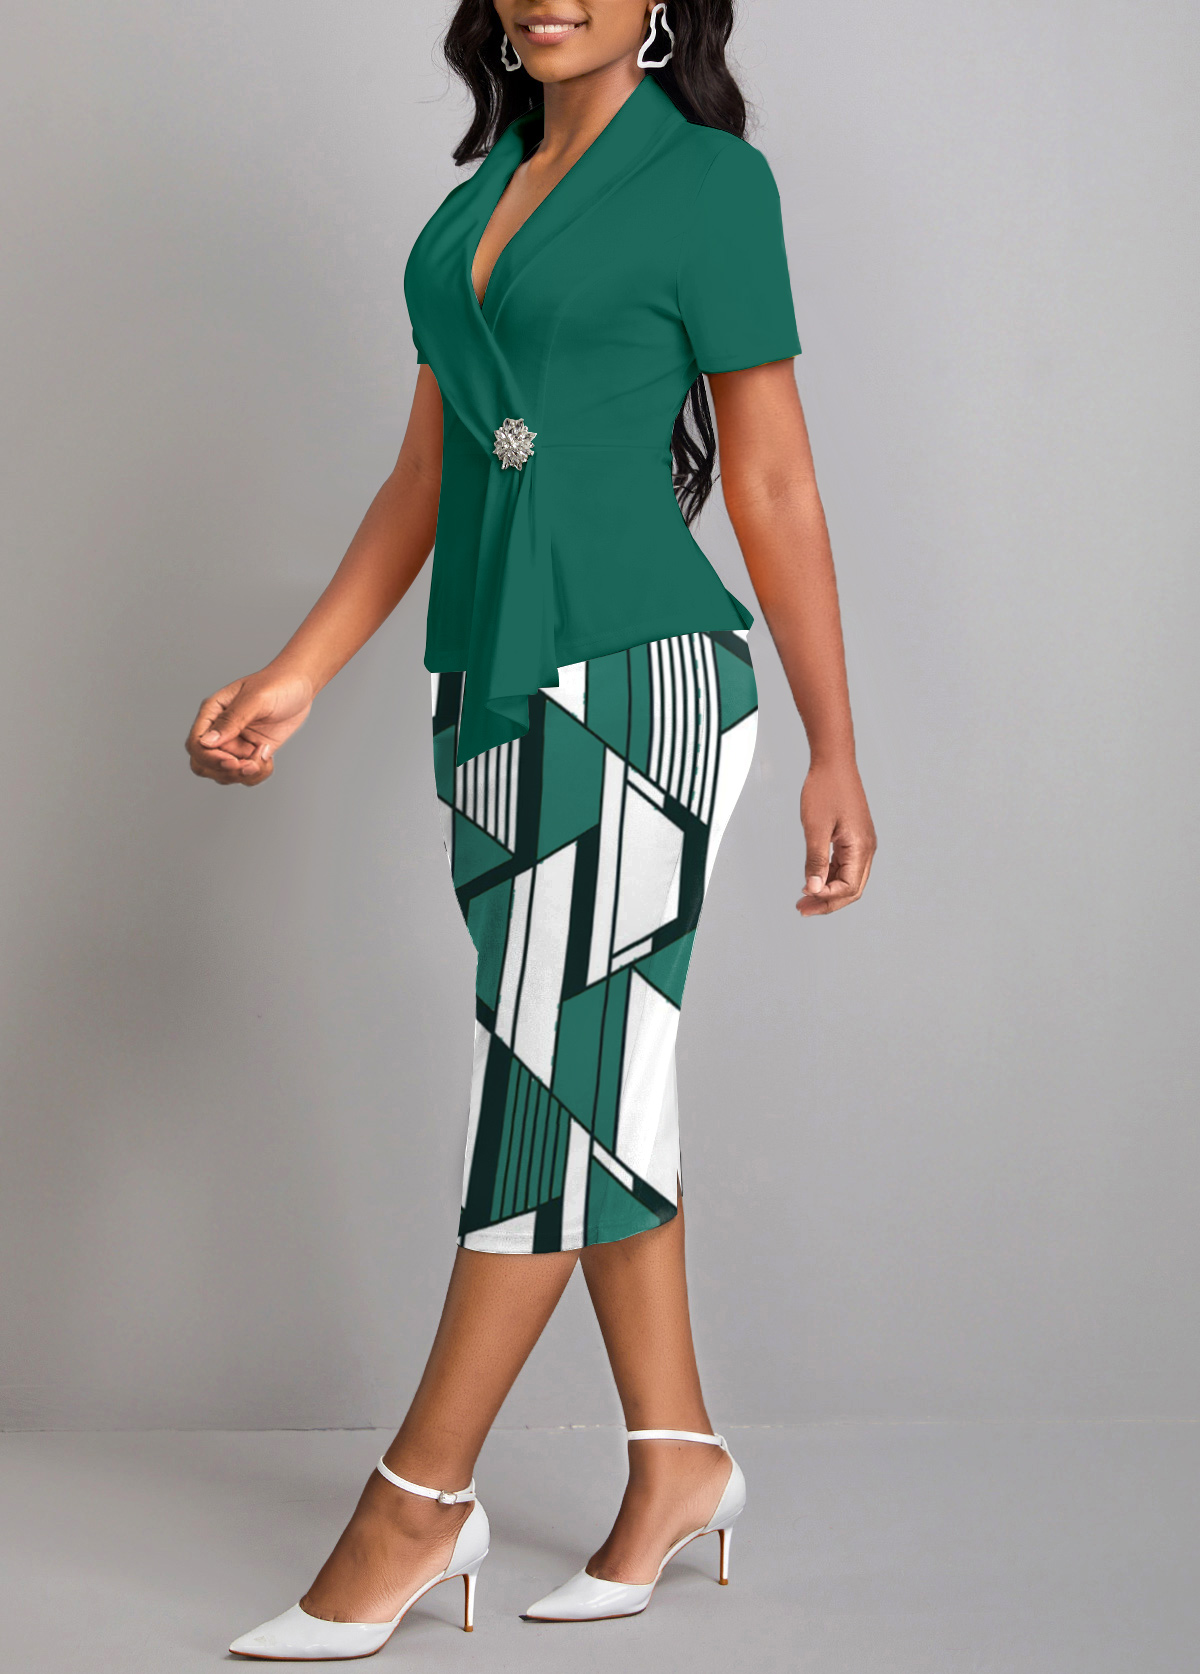 Geometric Print Fake 2in1 Turquoise Short Sleeve Bodycon Dress